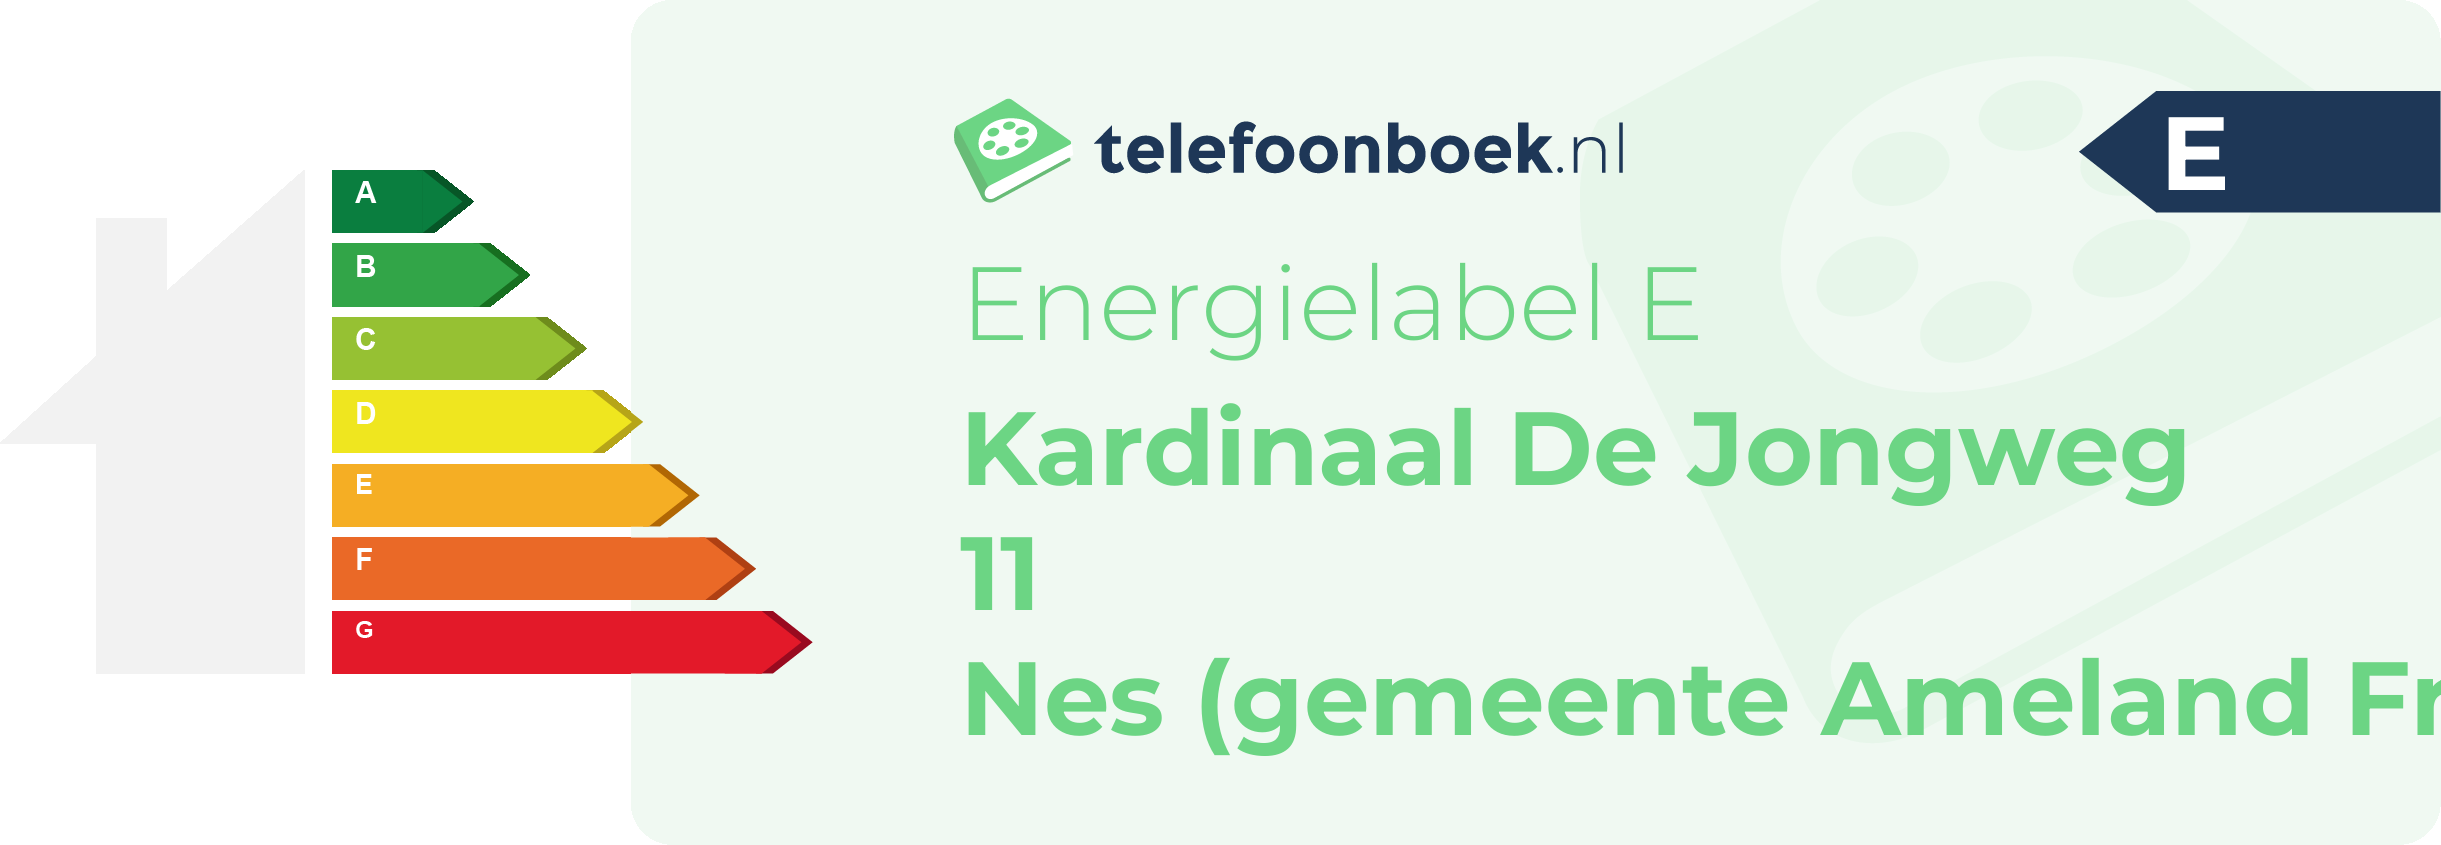 Energielabel Kardinaal De Jongweg 11 Nes (gemeente Ameland Friesland)